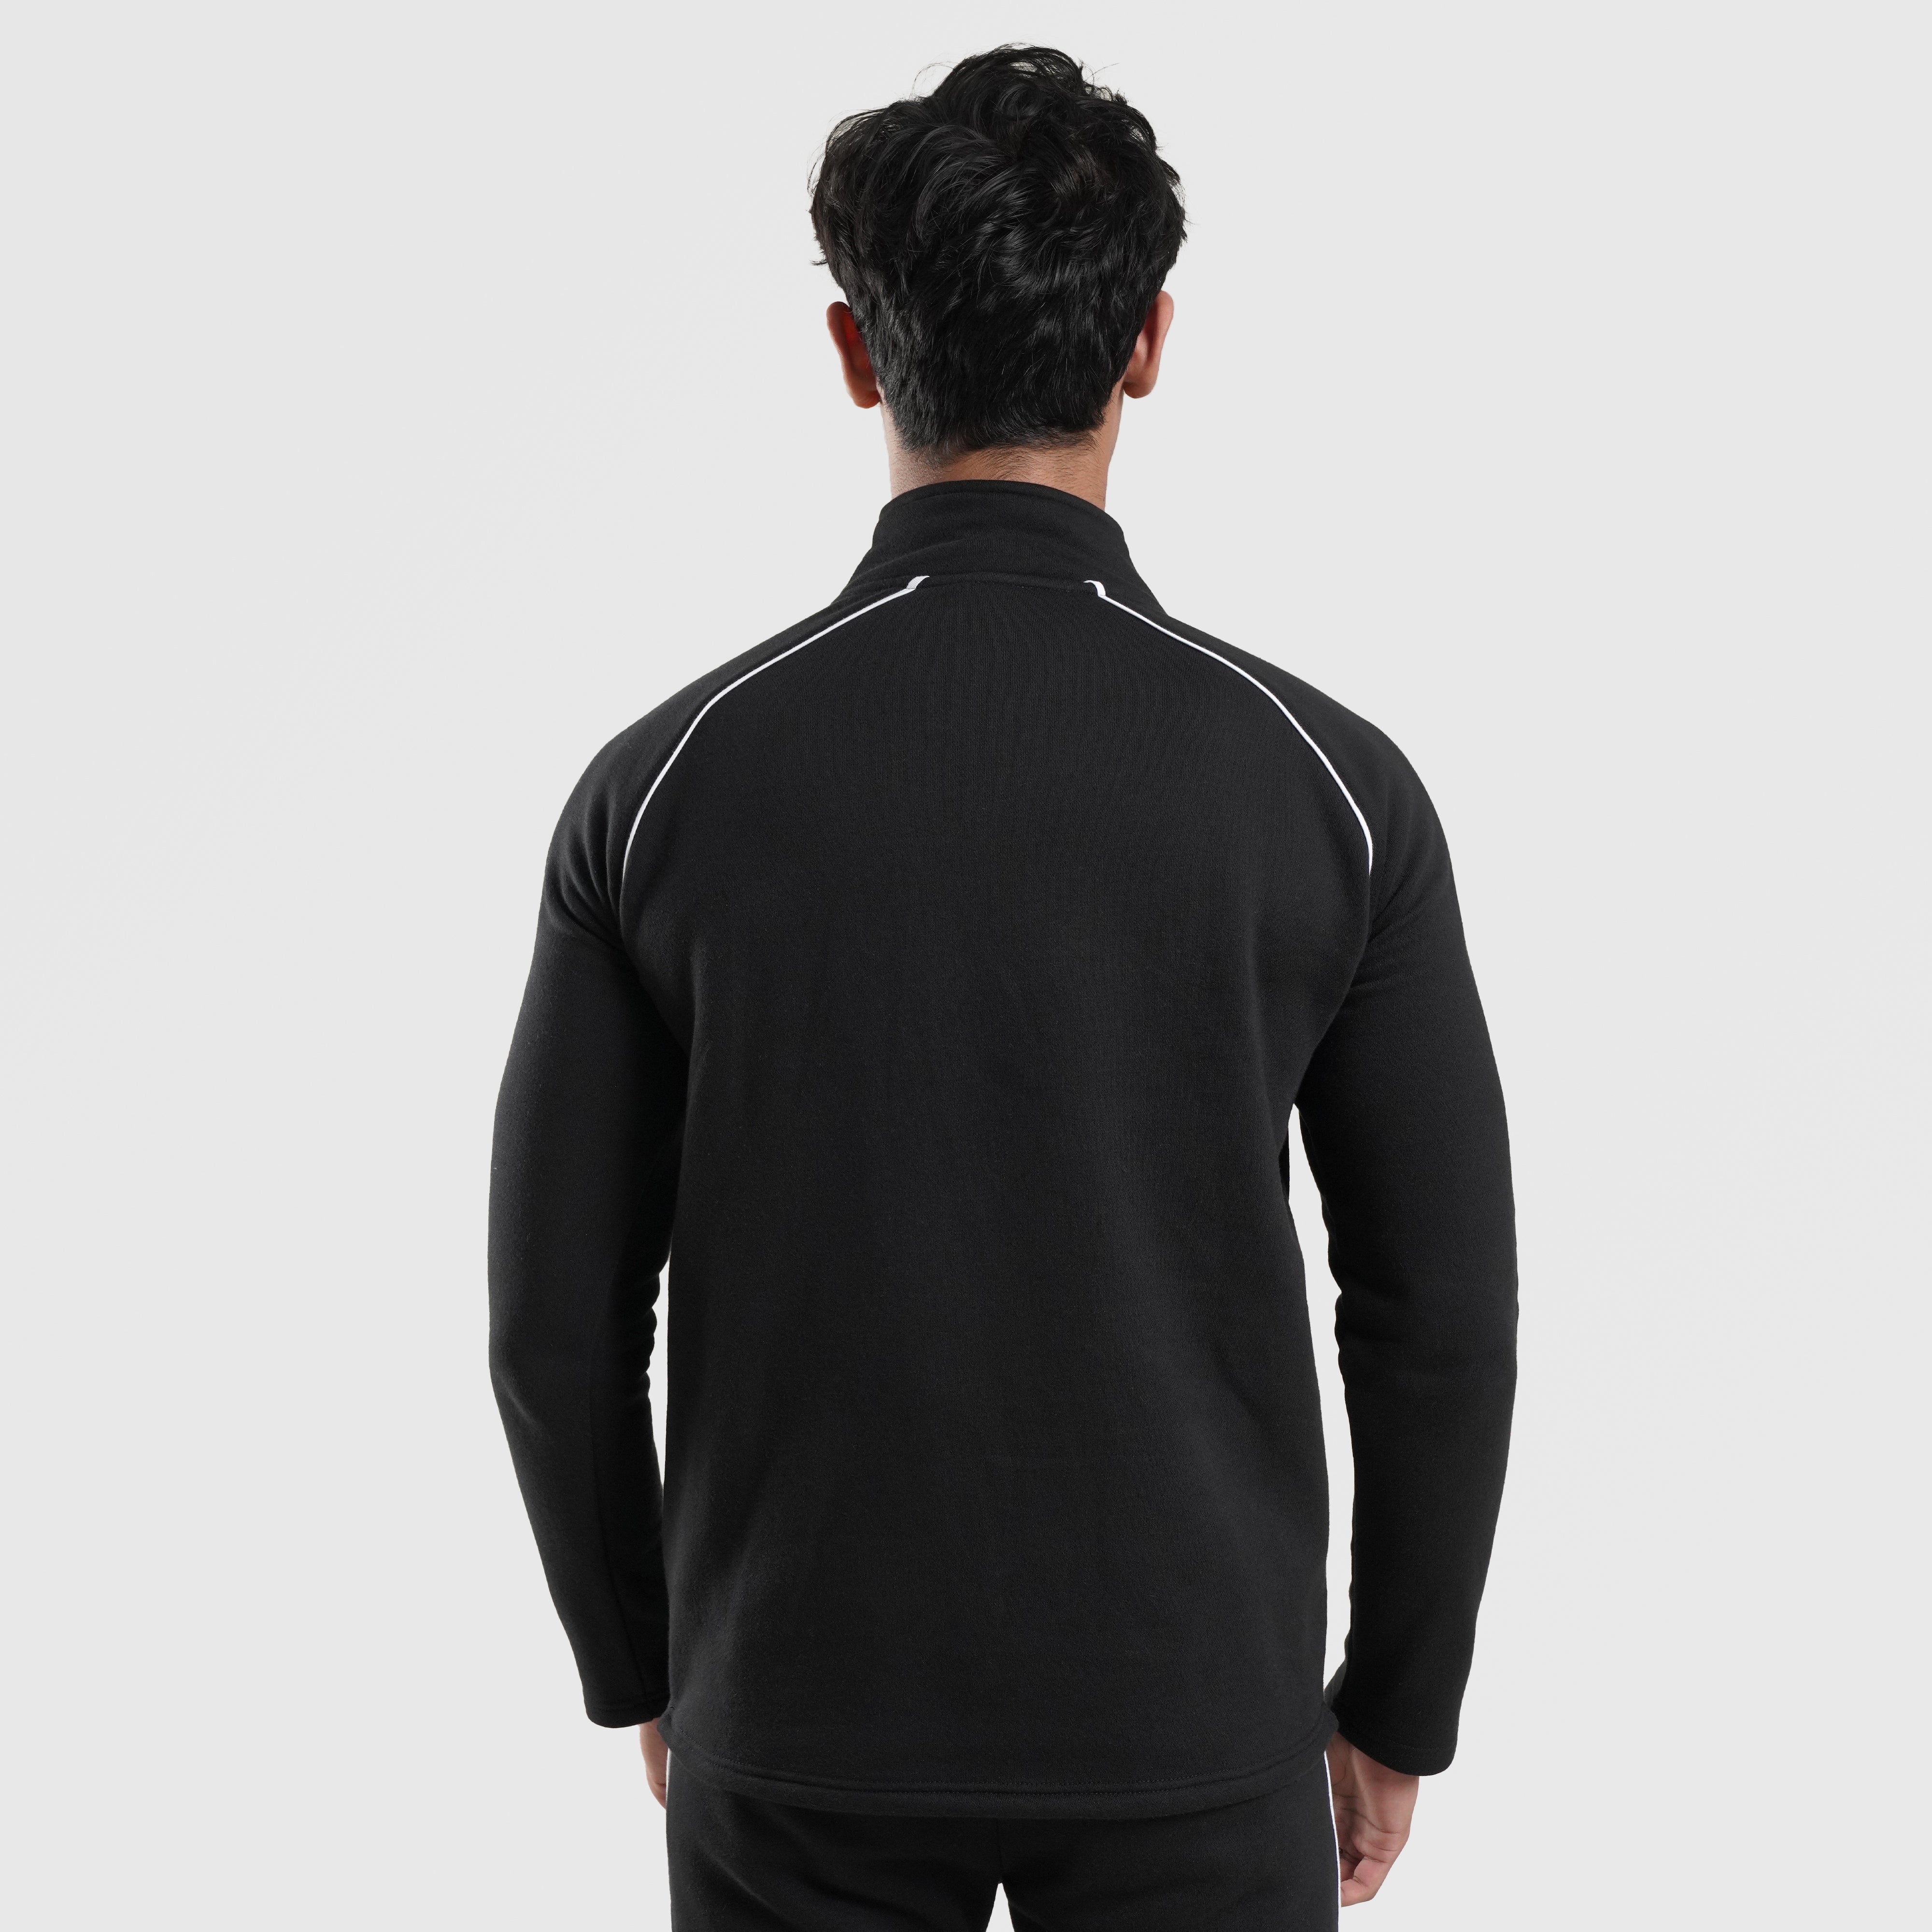 Range Sweatshirt (Black)